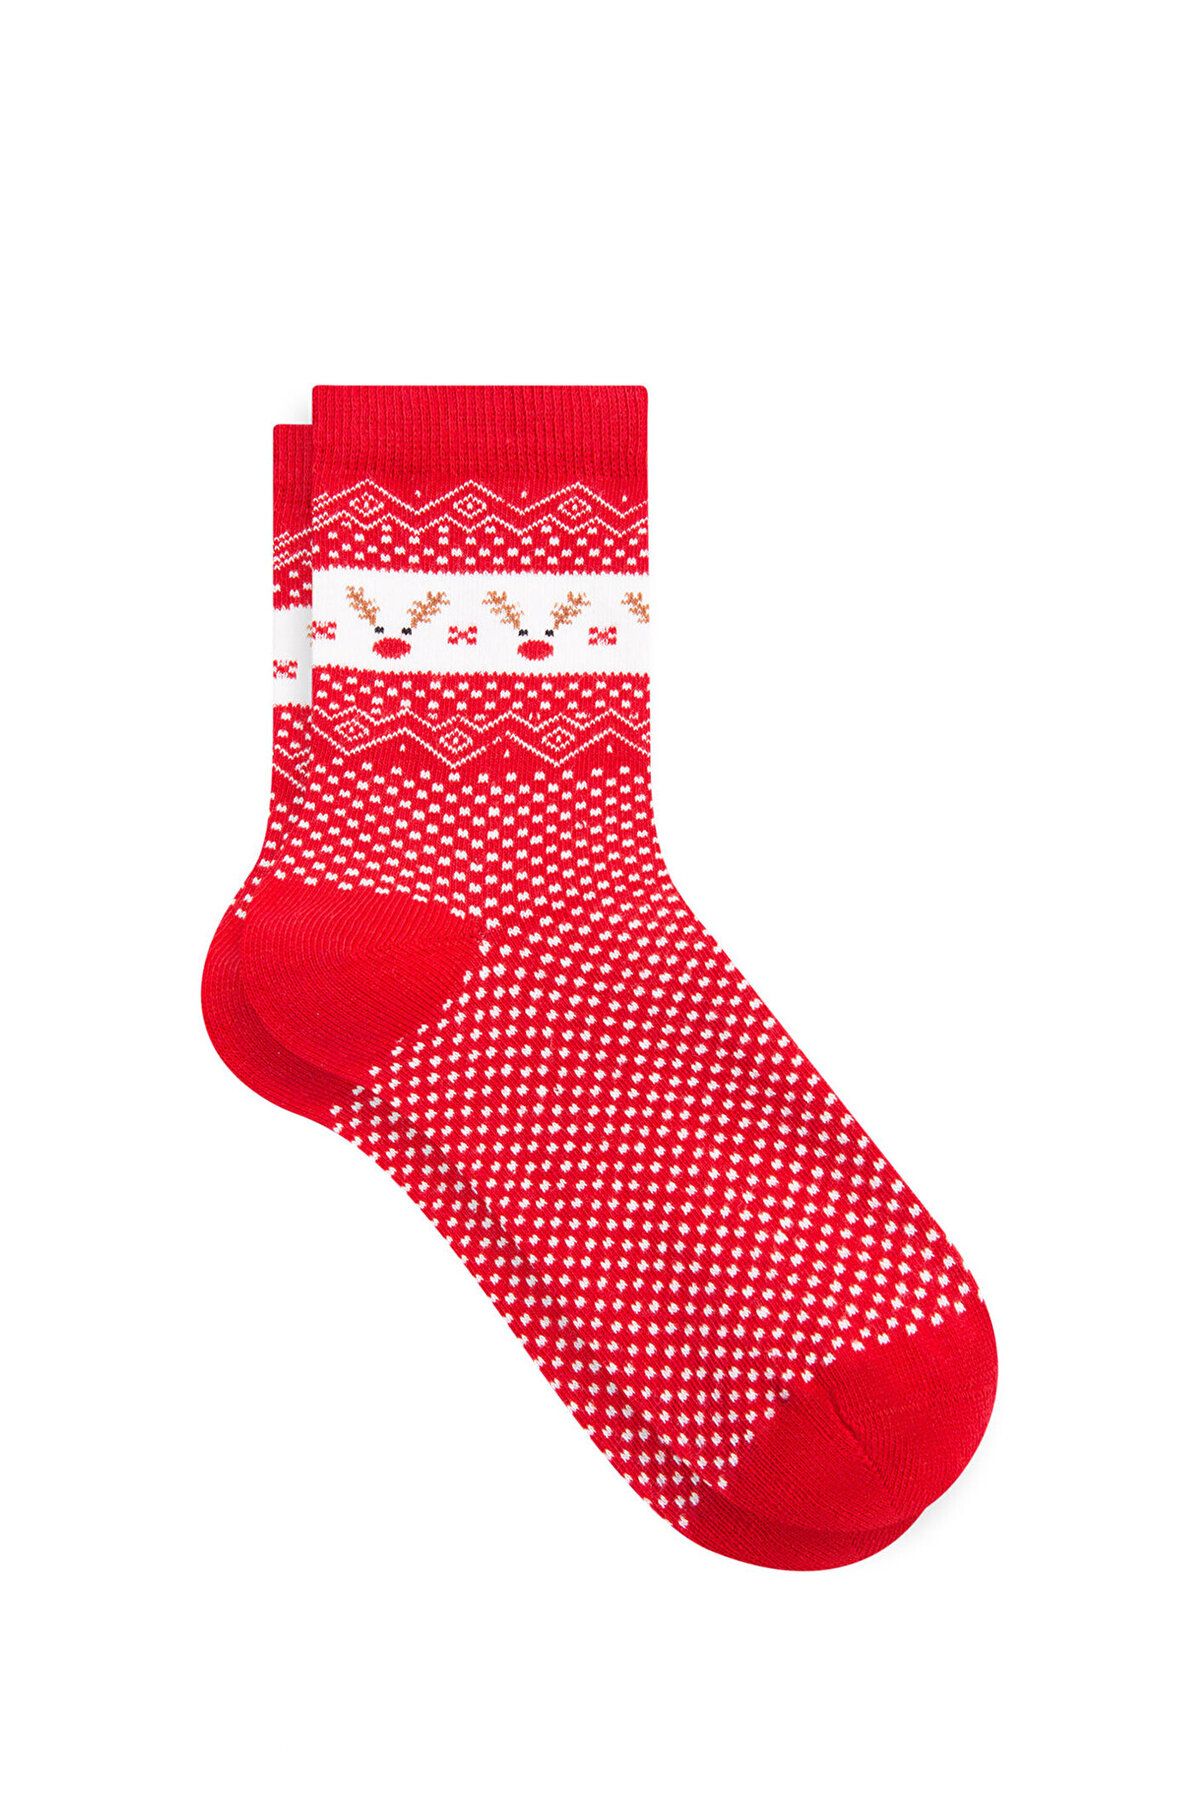 Mavi جورابهای قرمز با مضمون کریسمس 1912462-82054